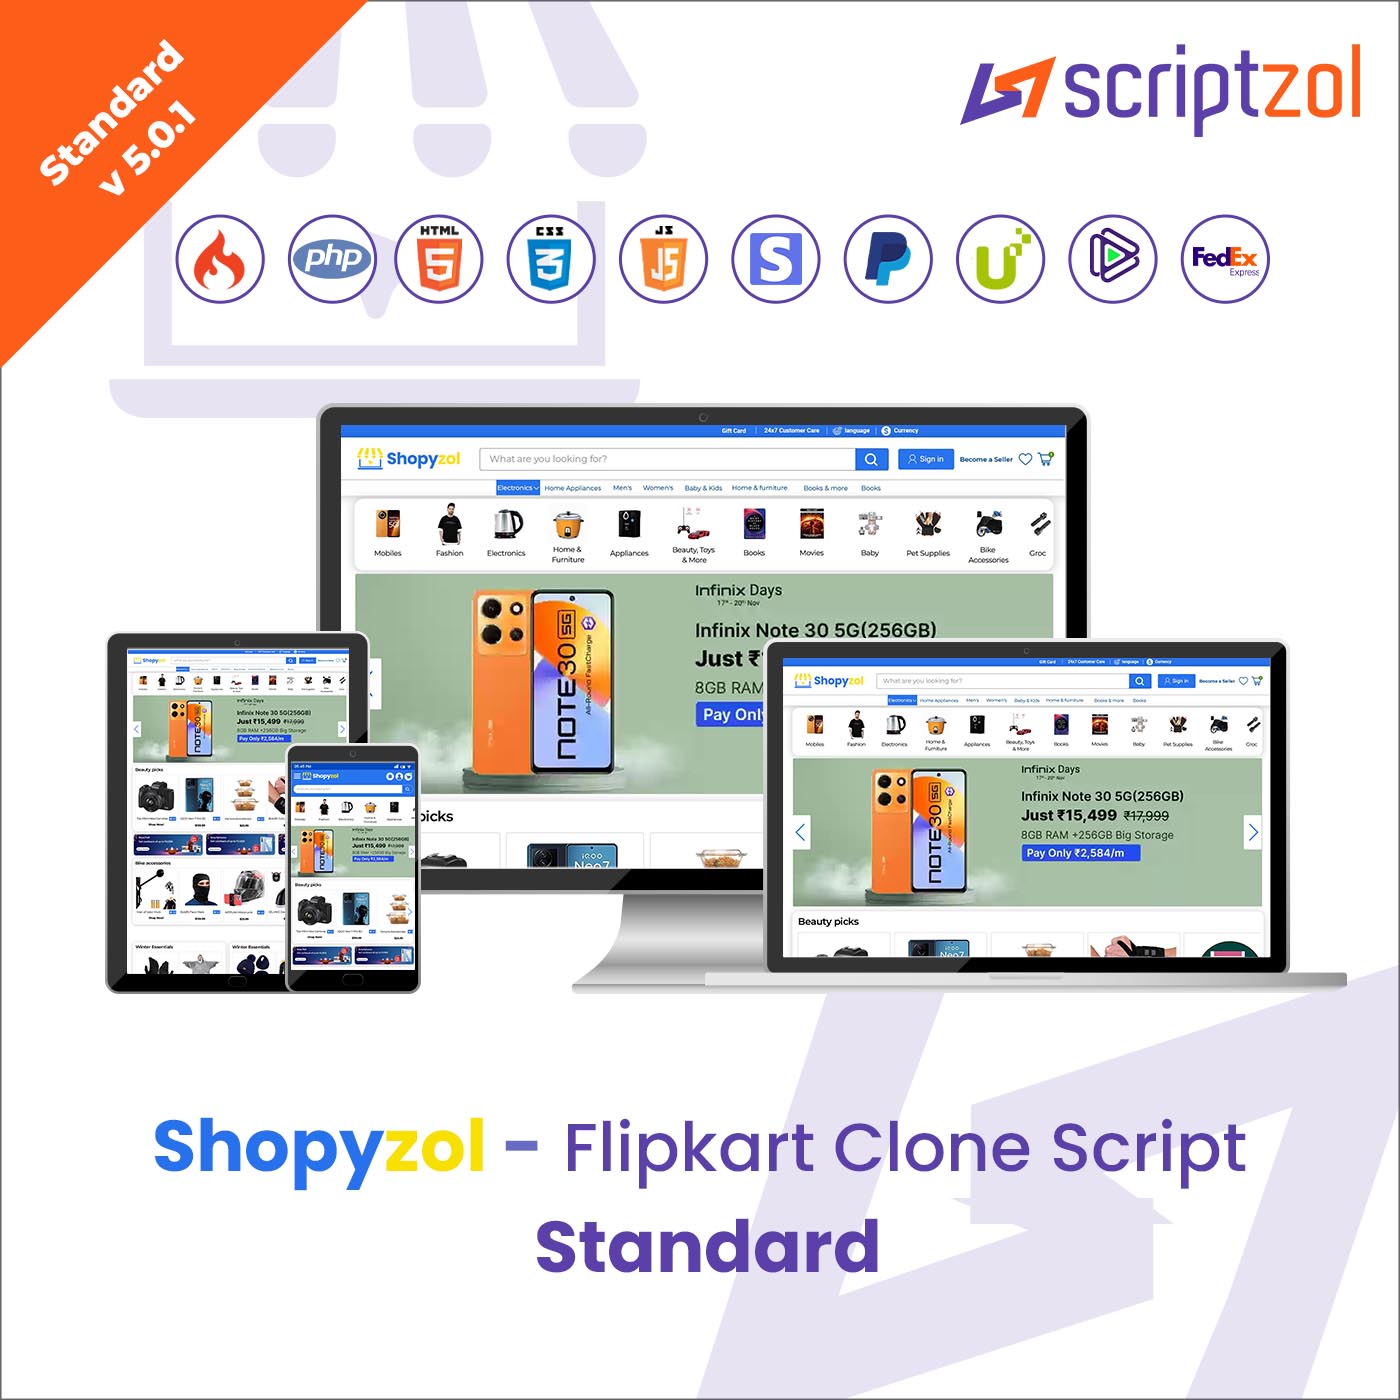 Best Flipkart Clone Script in India - photo